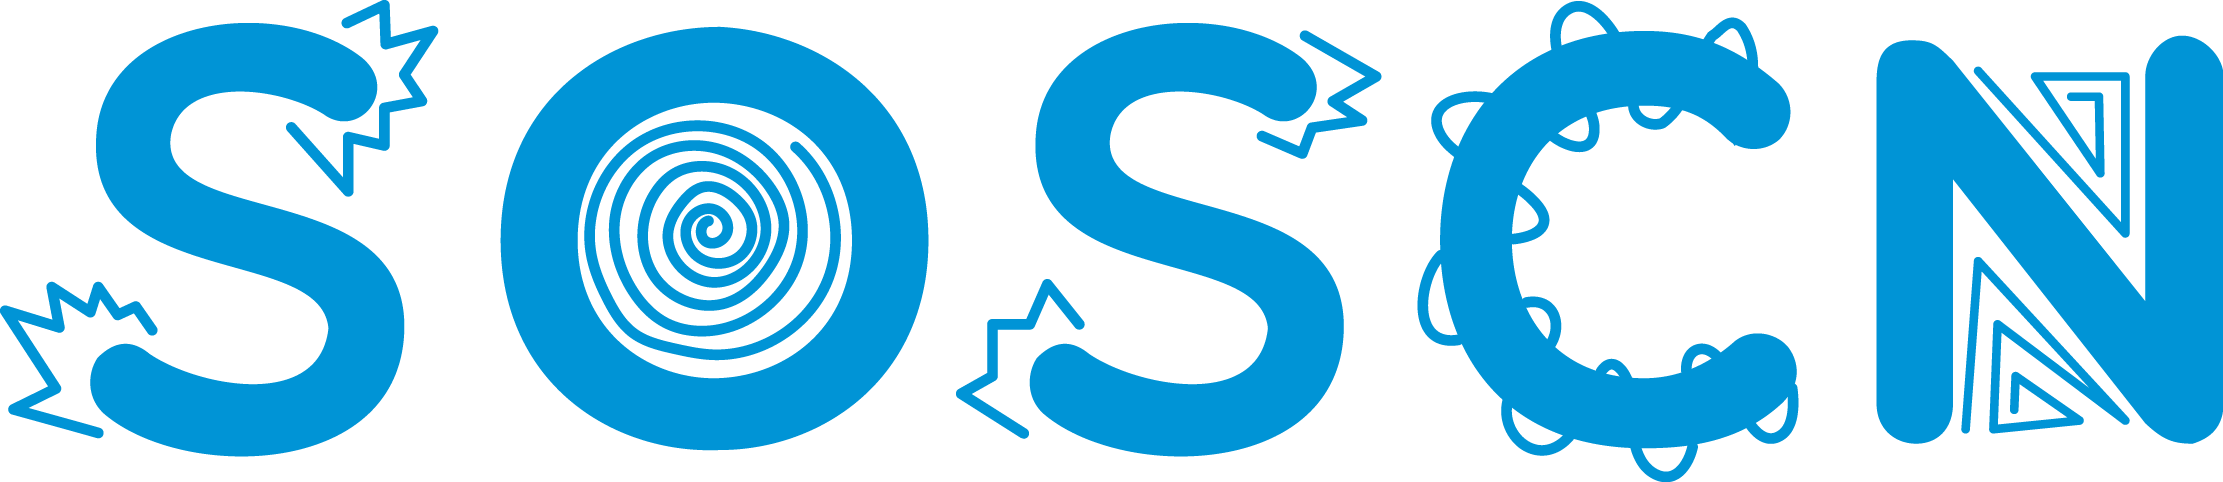 image for SOSCN_logo_blue